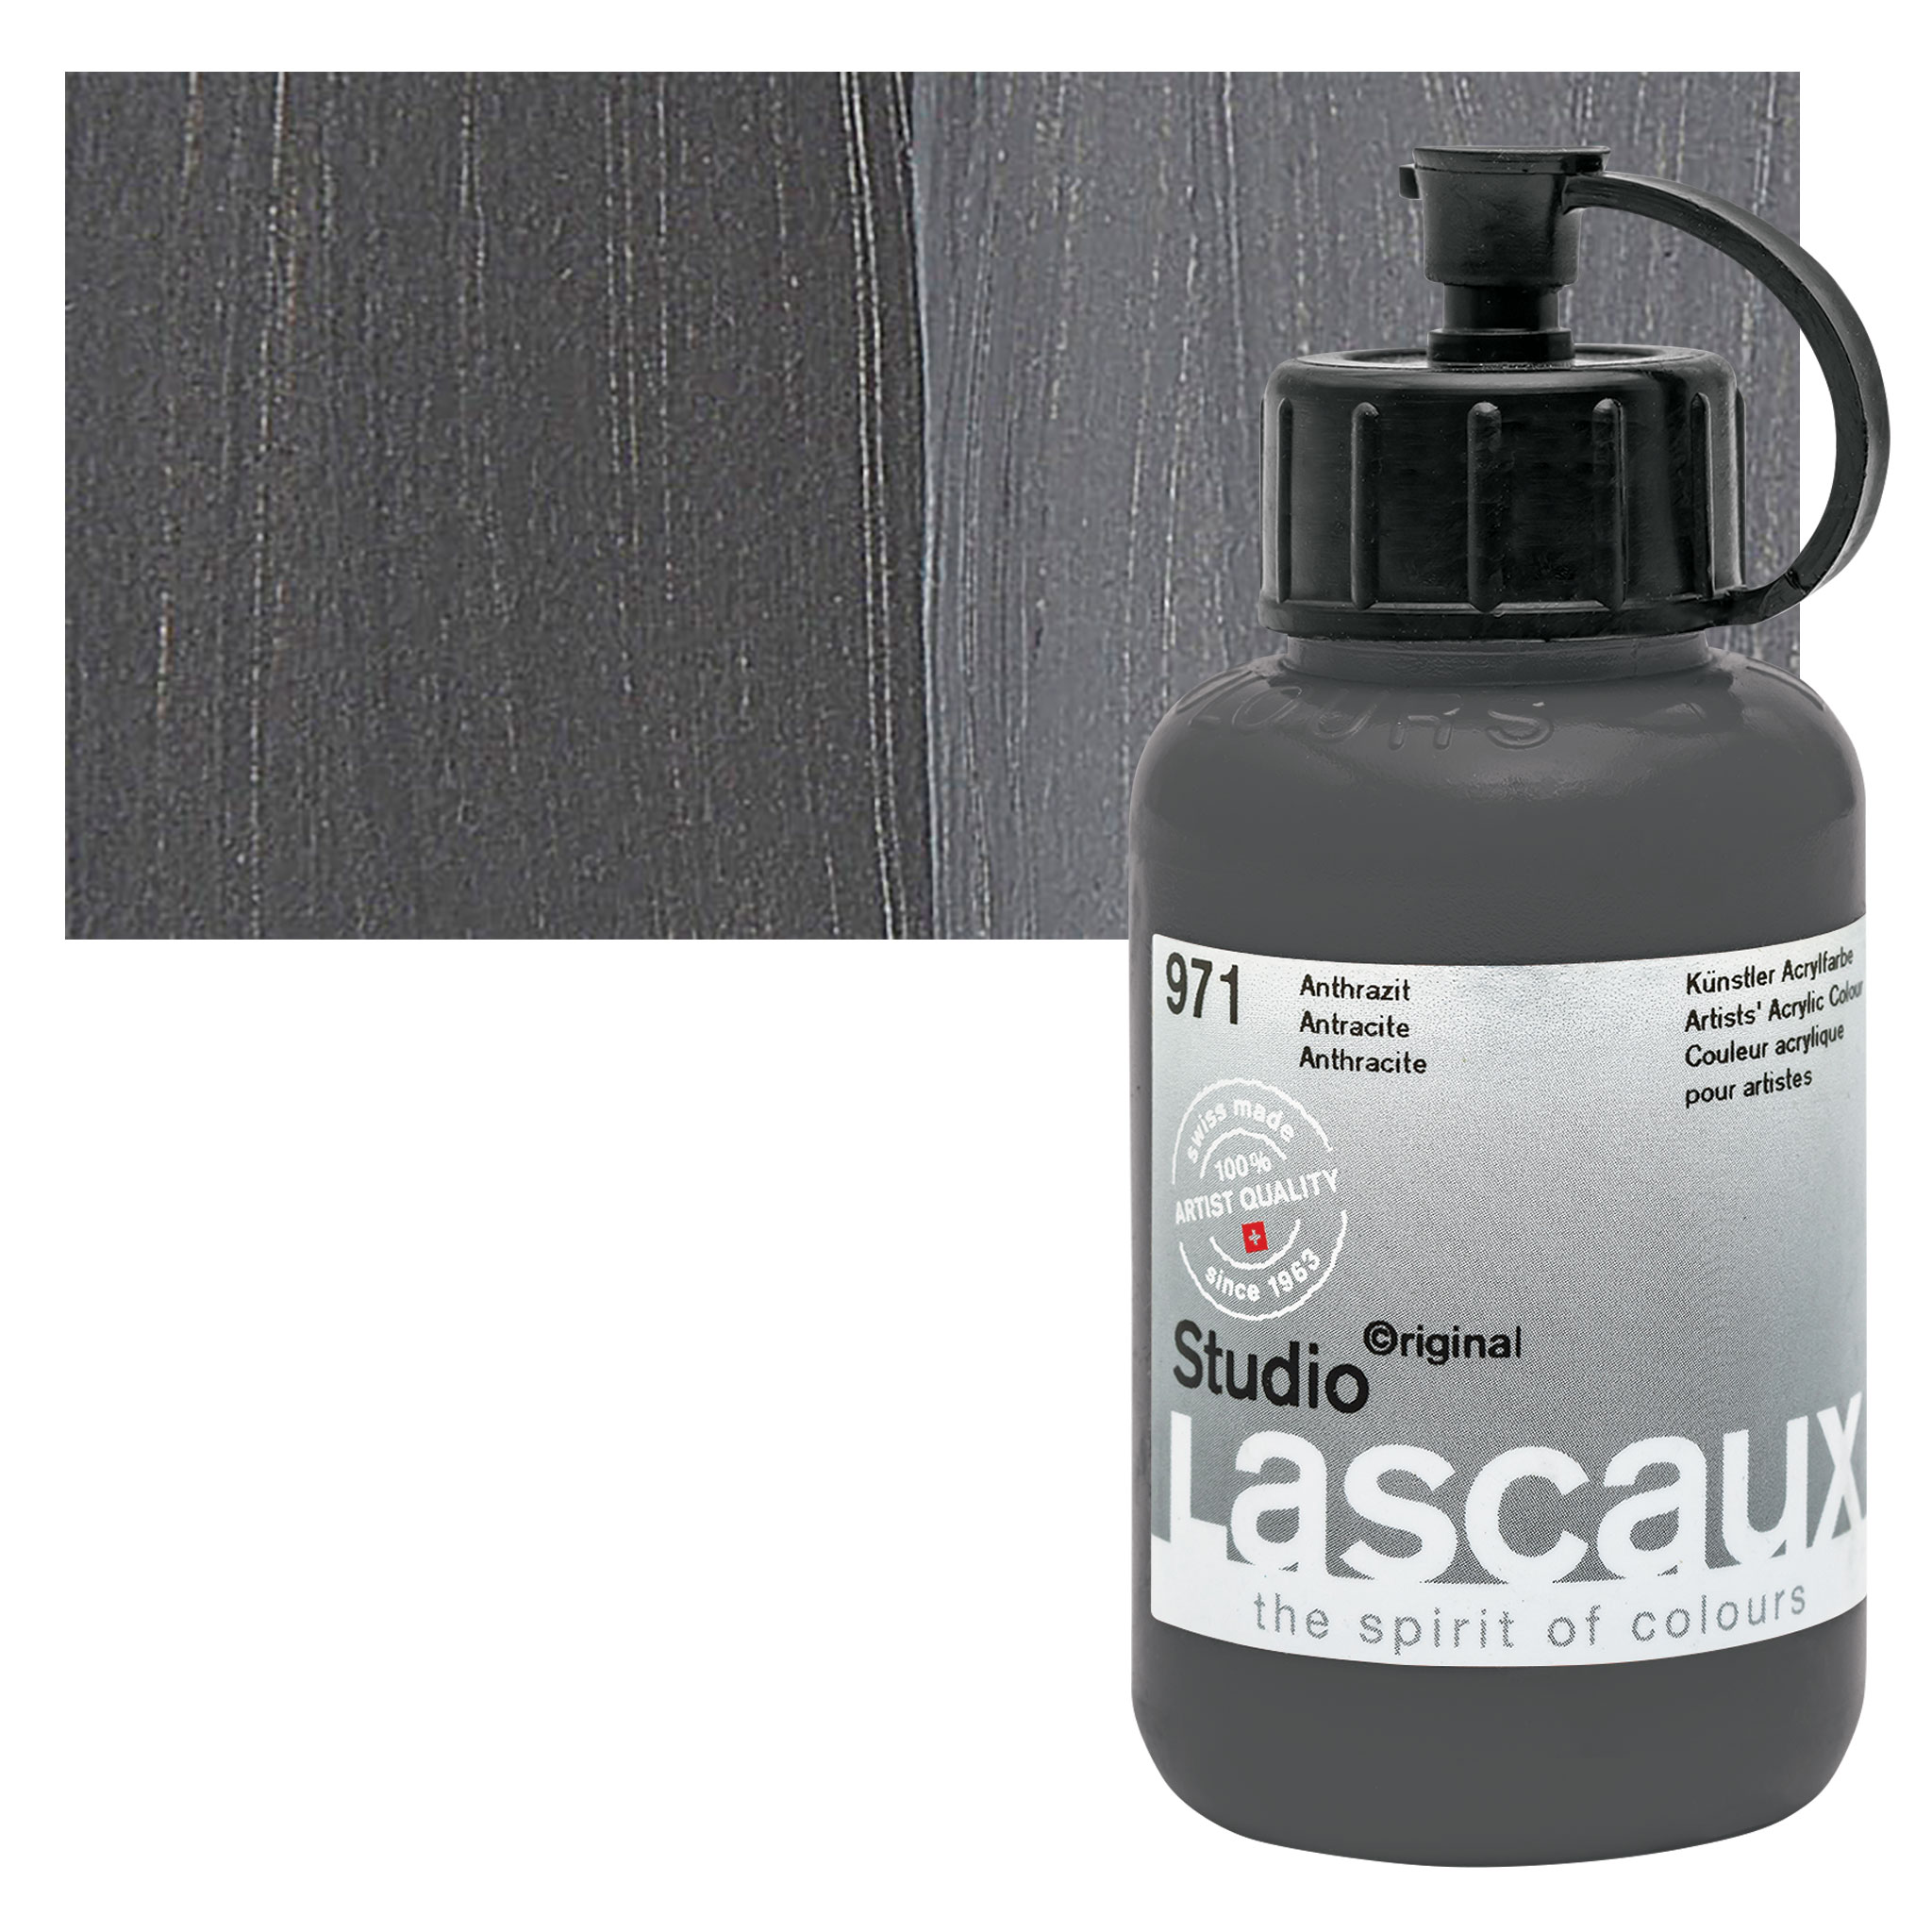 Lascaux artists' brushes: high quality, robust, durable - Lascaux